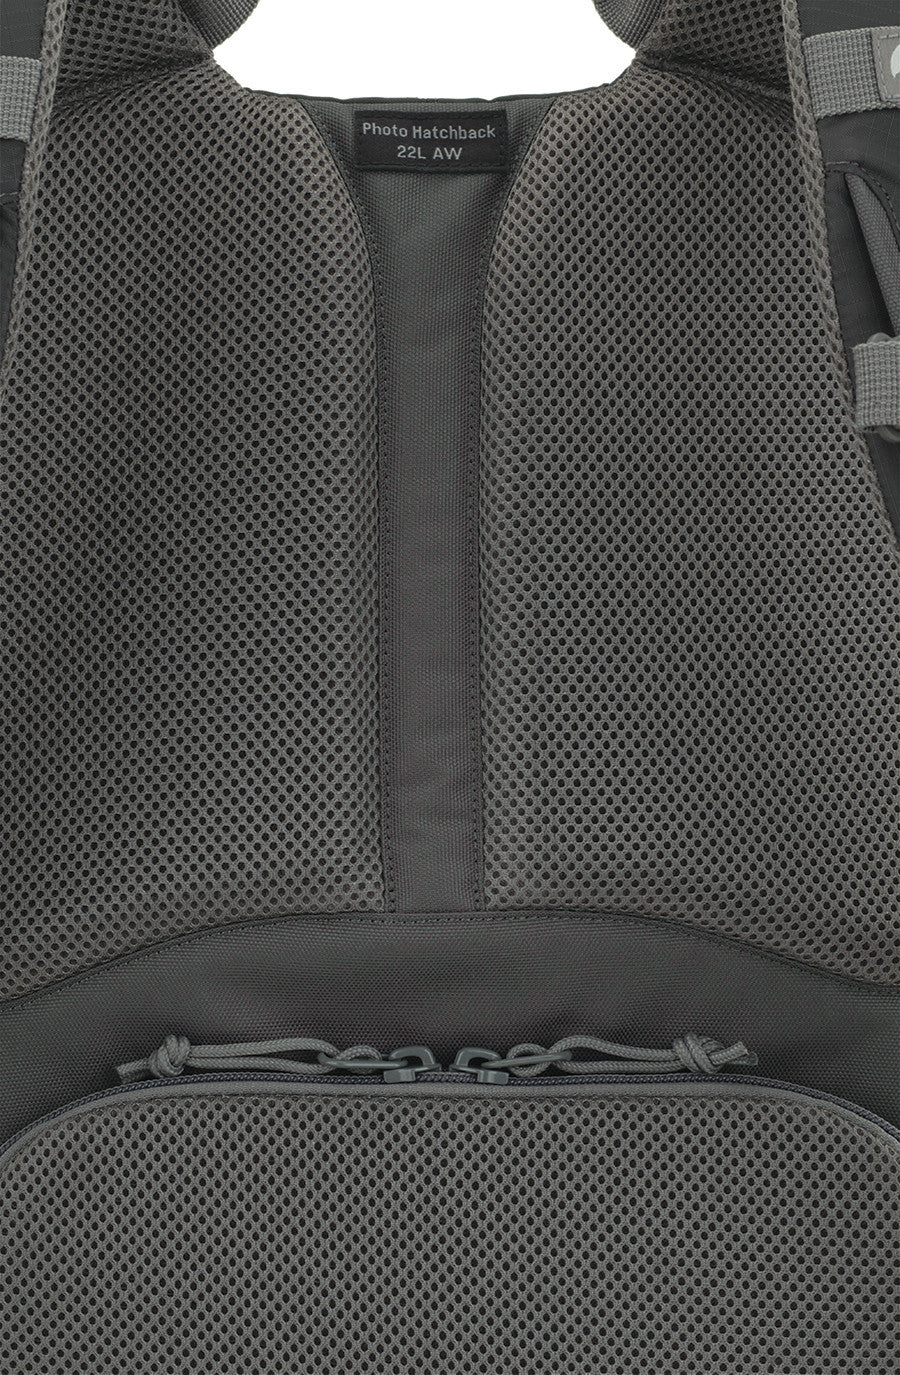 Lowepro Photo Hatchback 22L AW Camera Backpack (Slate Grey), discontinued, Lowepro - Pictureline  - 7